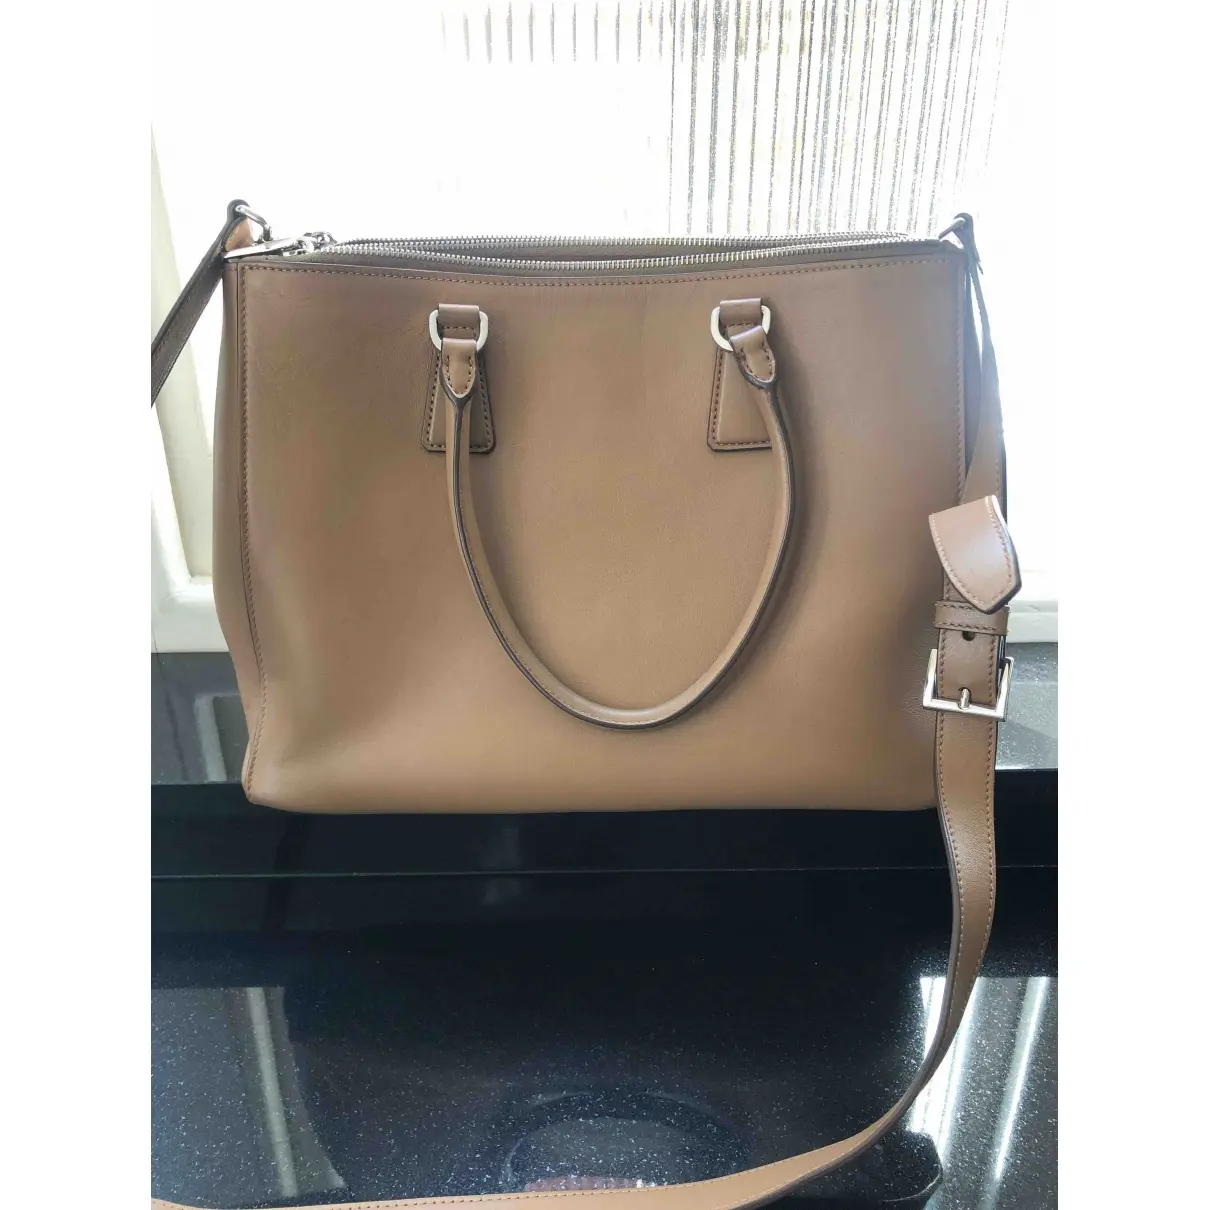 Prada Galleria leather handbag for sale